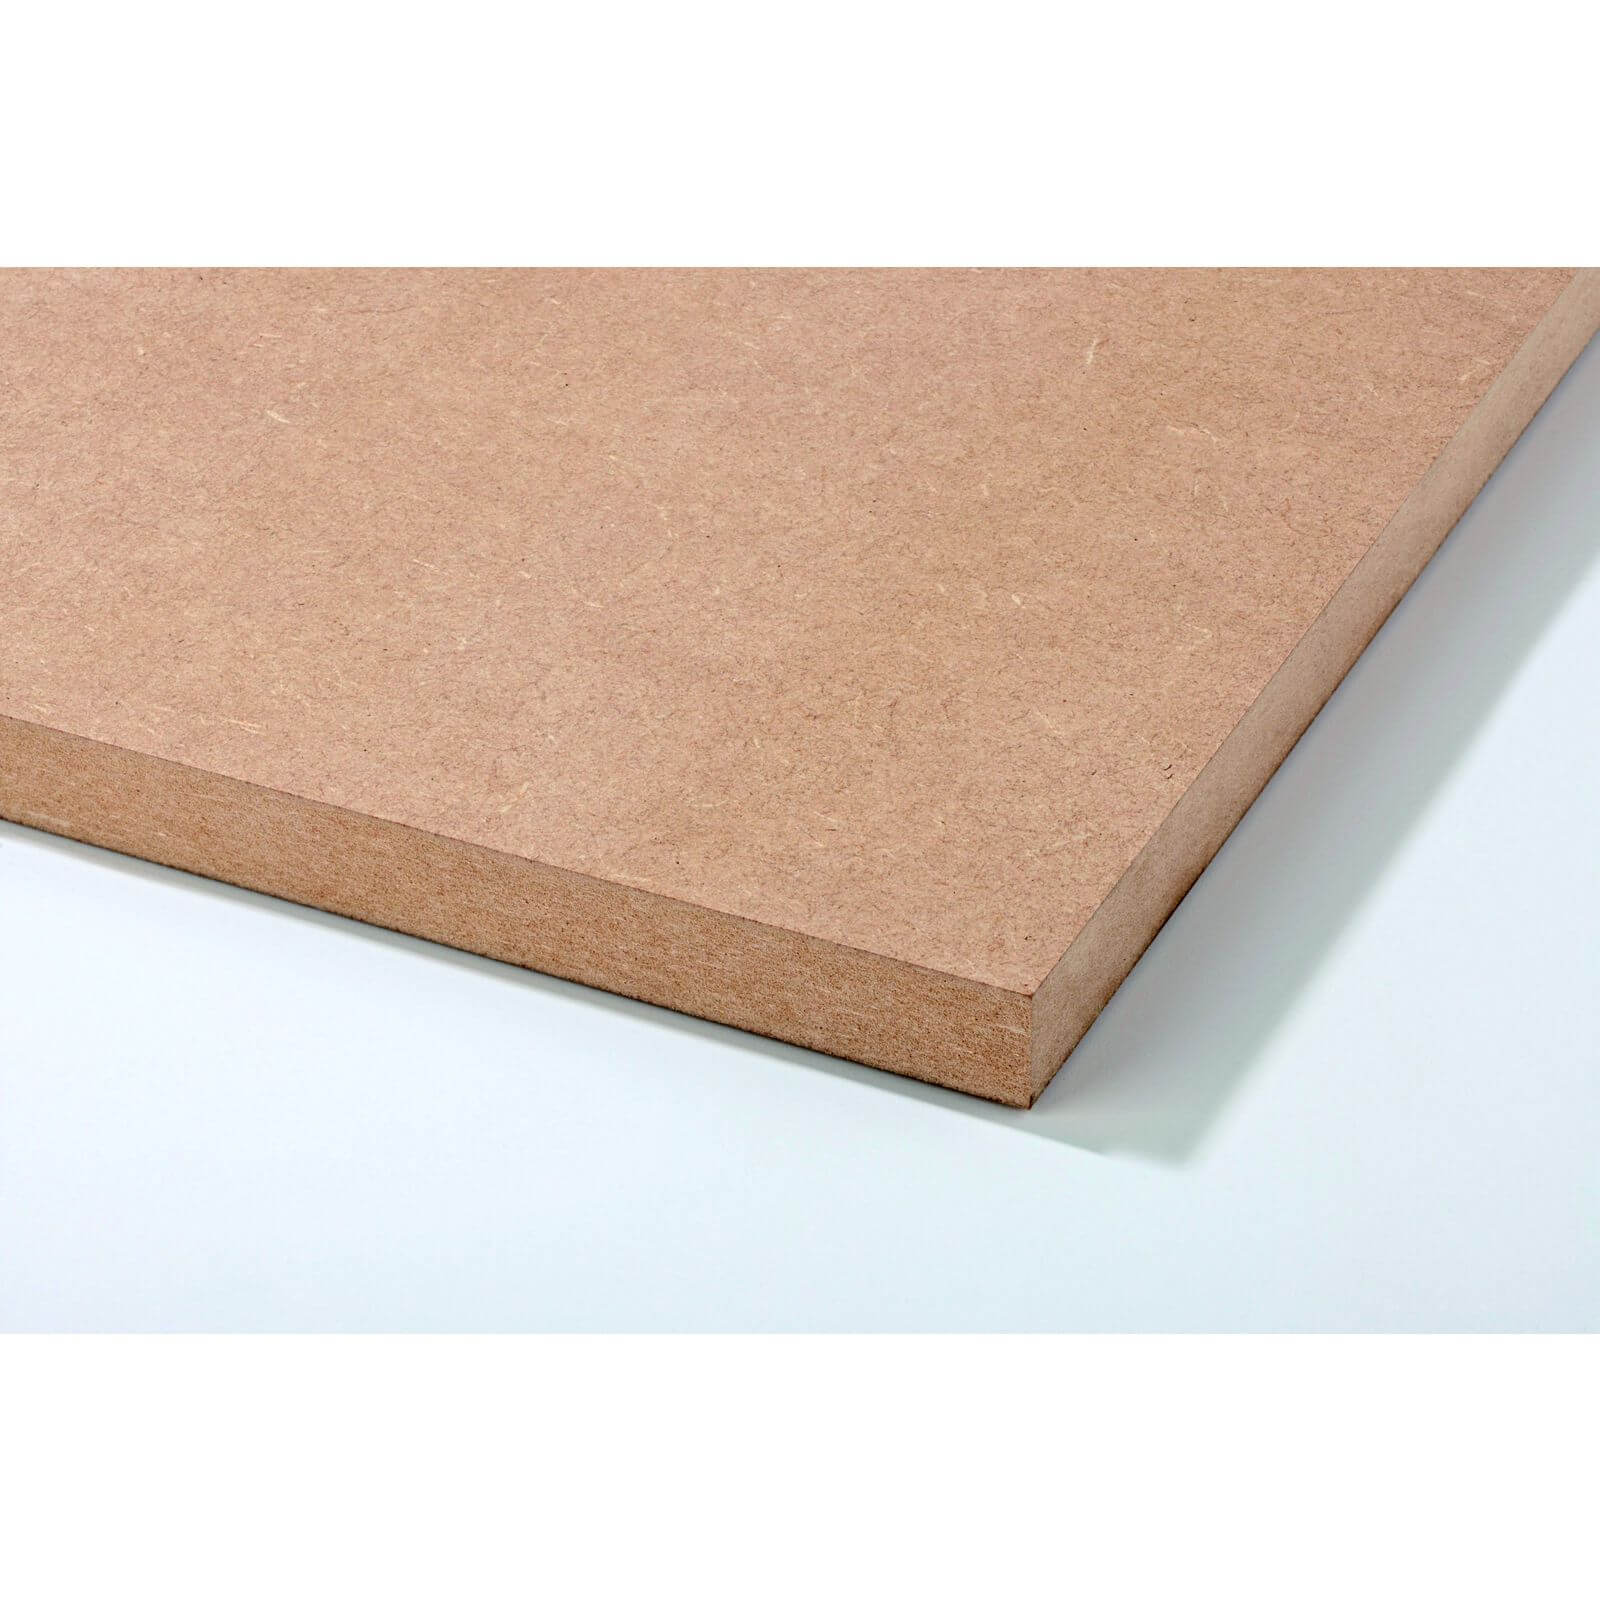 Metsa MDF Sheet Board 2.4m (12 x 2440 x 1220mm)